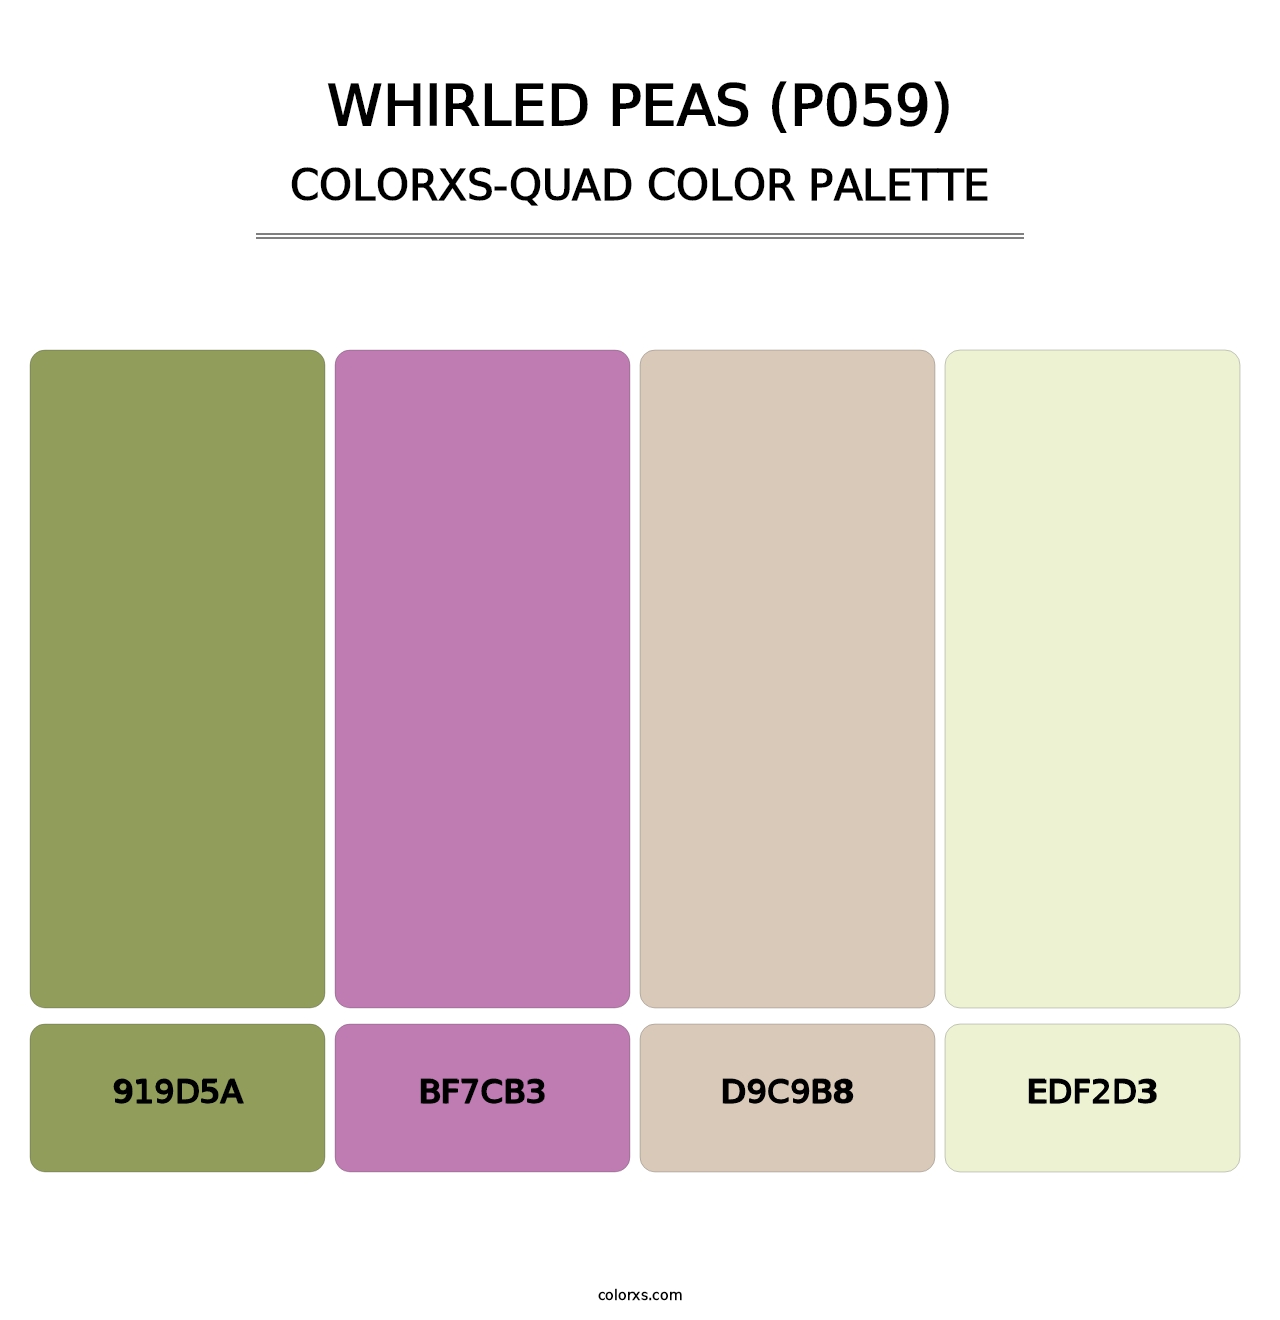 Whirled Peas (P059) - Colorxs Quad Palette